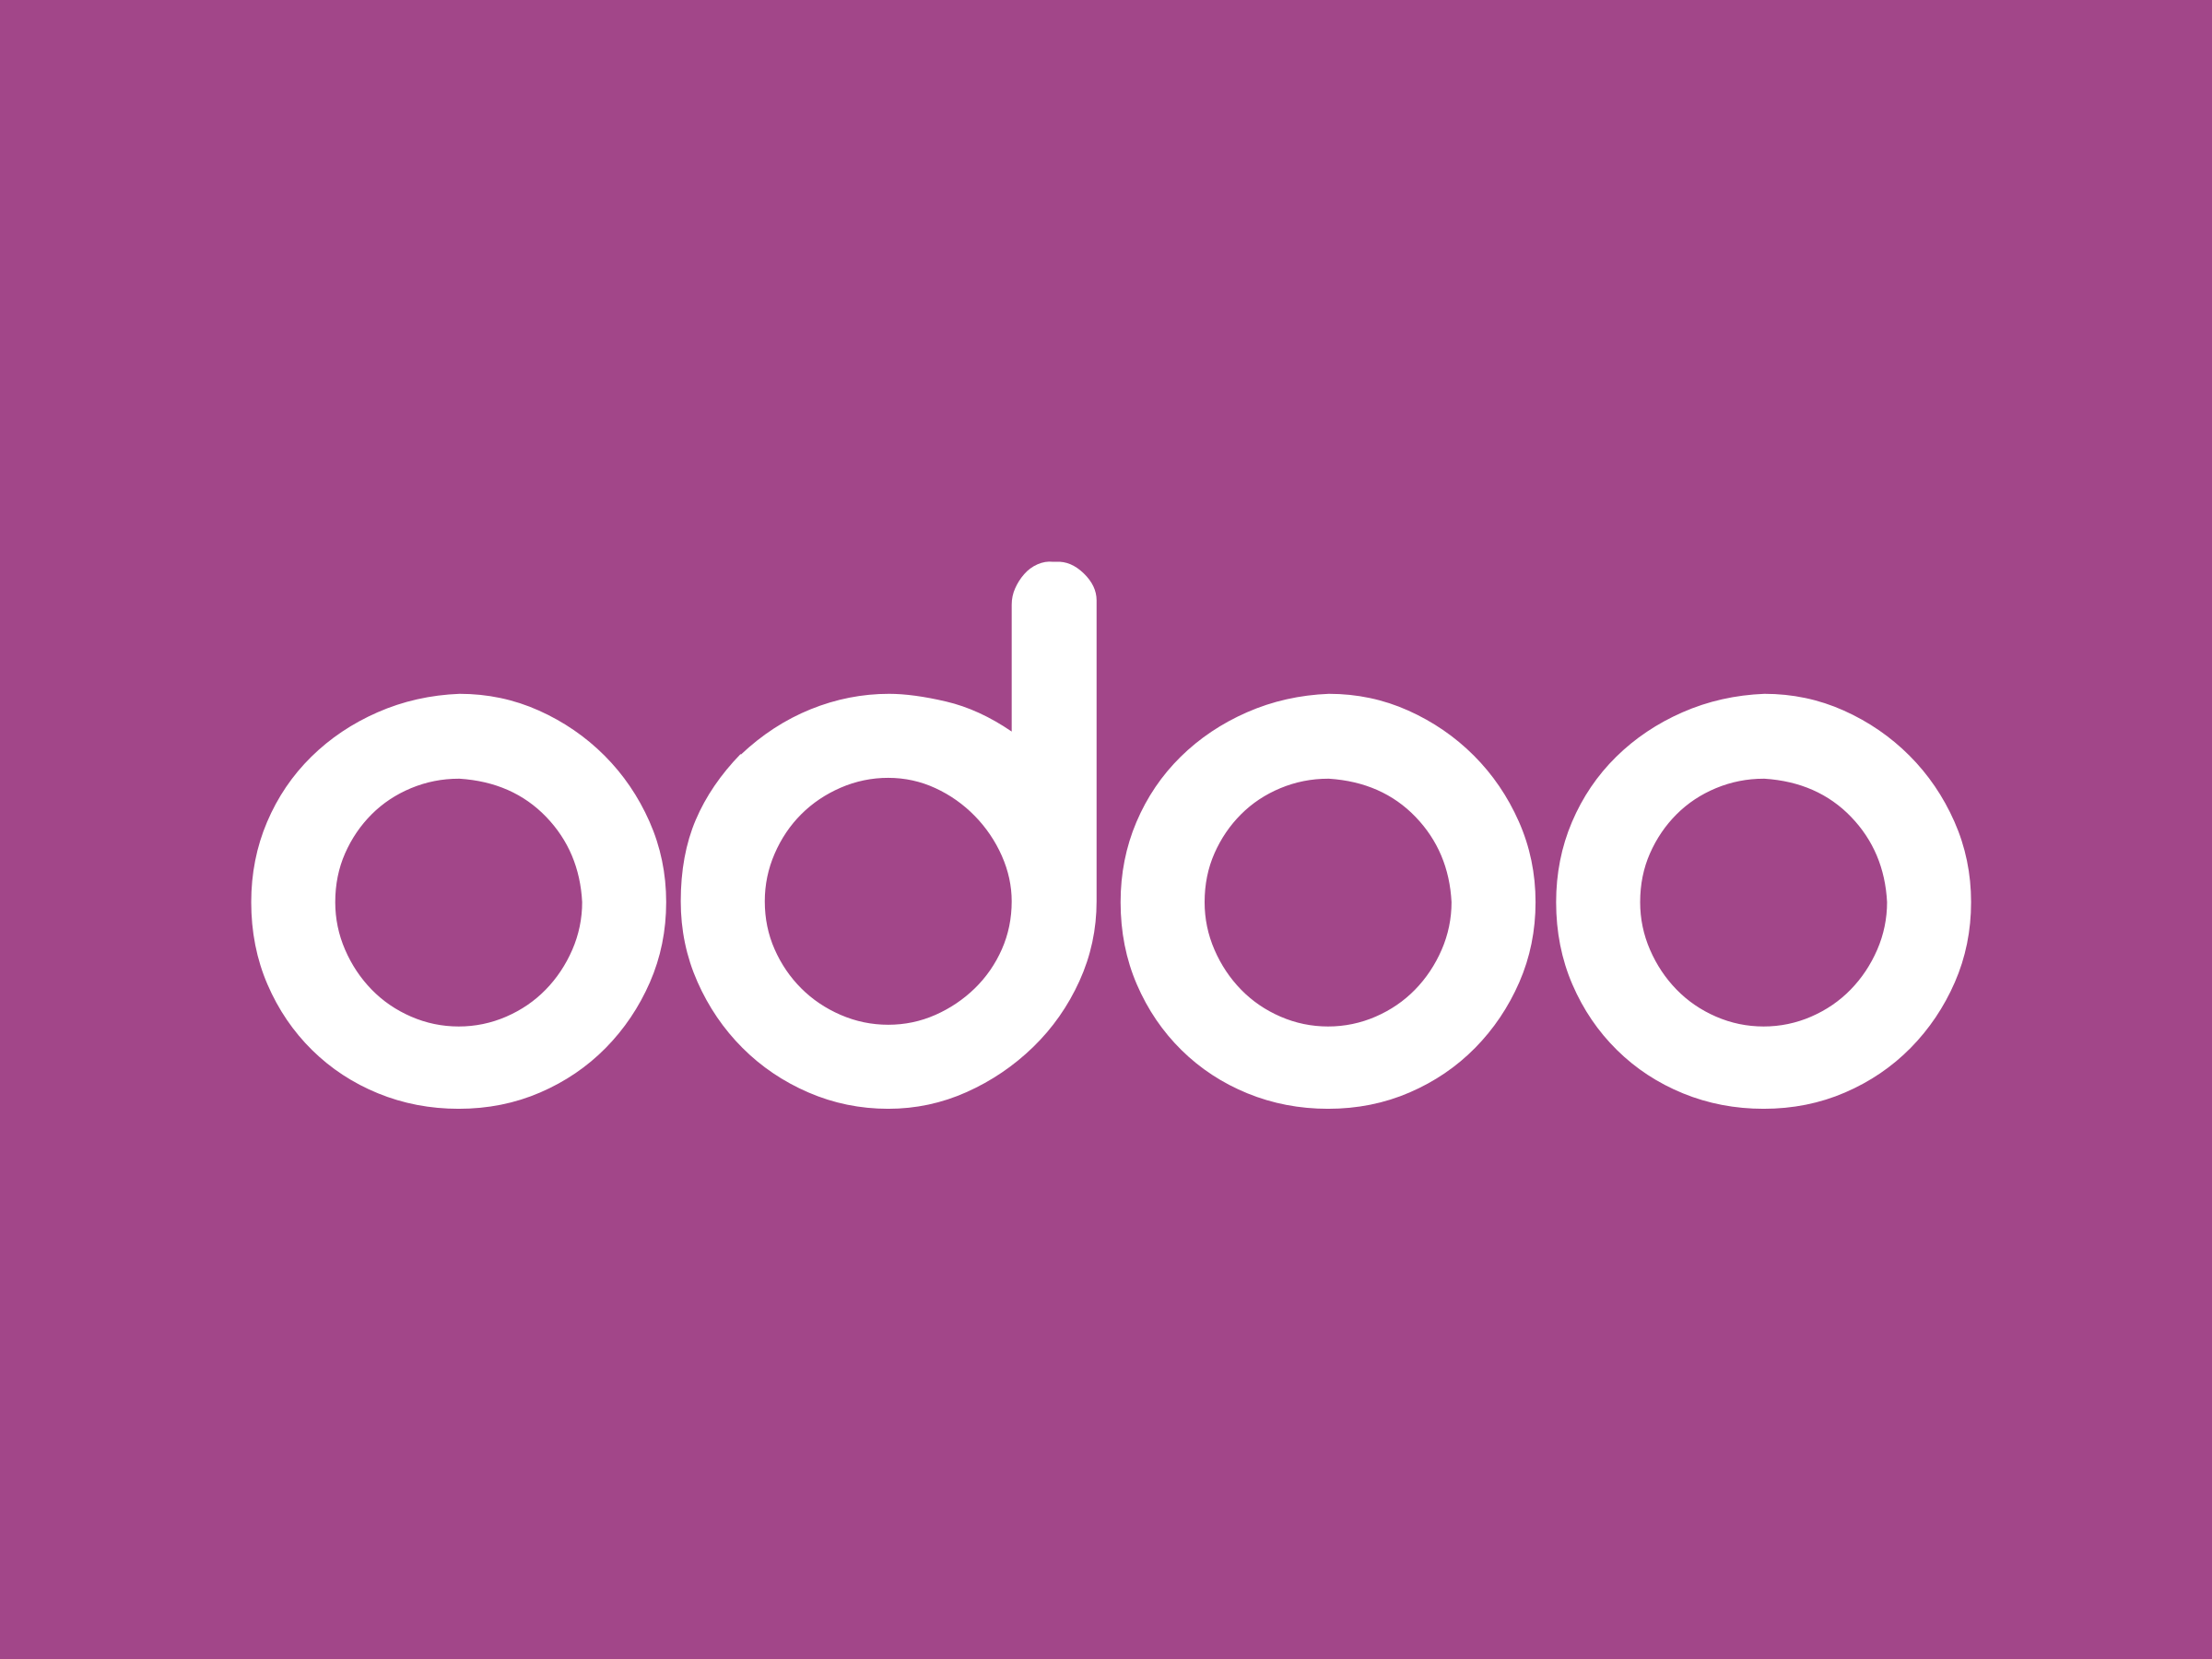 Odoo Logo - Odoo Logo PNG Transparent & SVG Vector - Freebie Supply